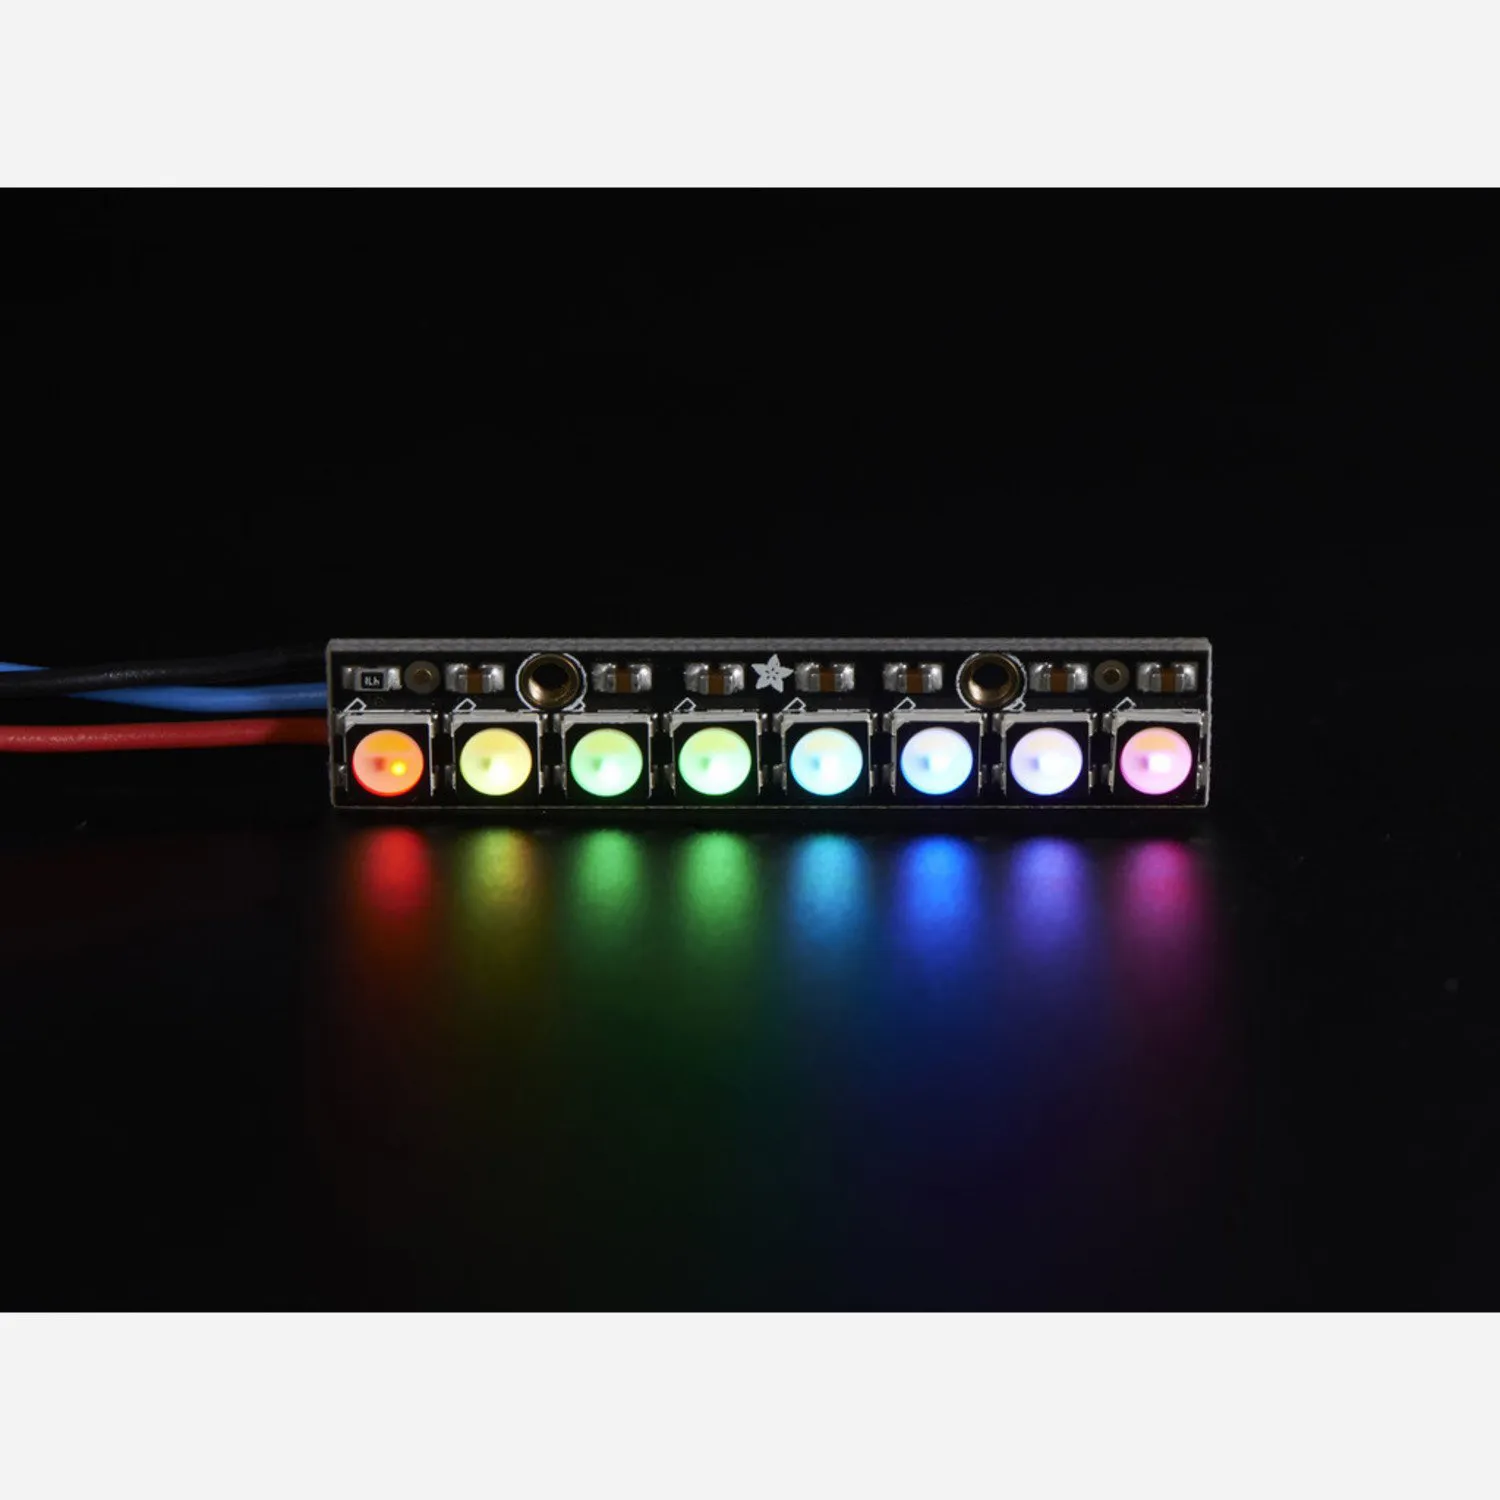 Photo of NeoPixel Stick - 8 x 5050 RGBW LEDs - Cool White - ~6000K